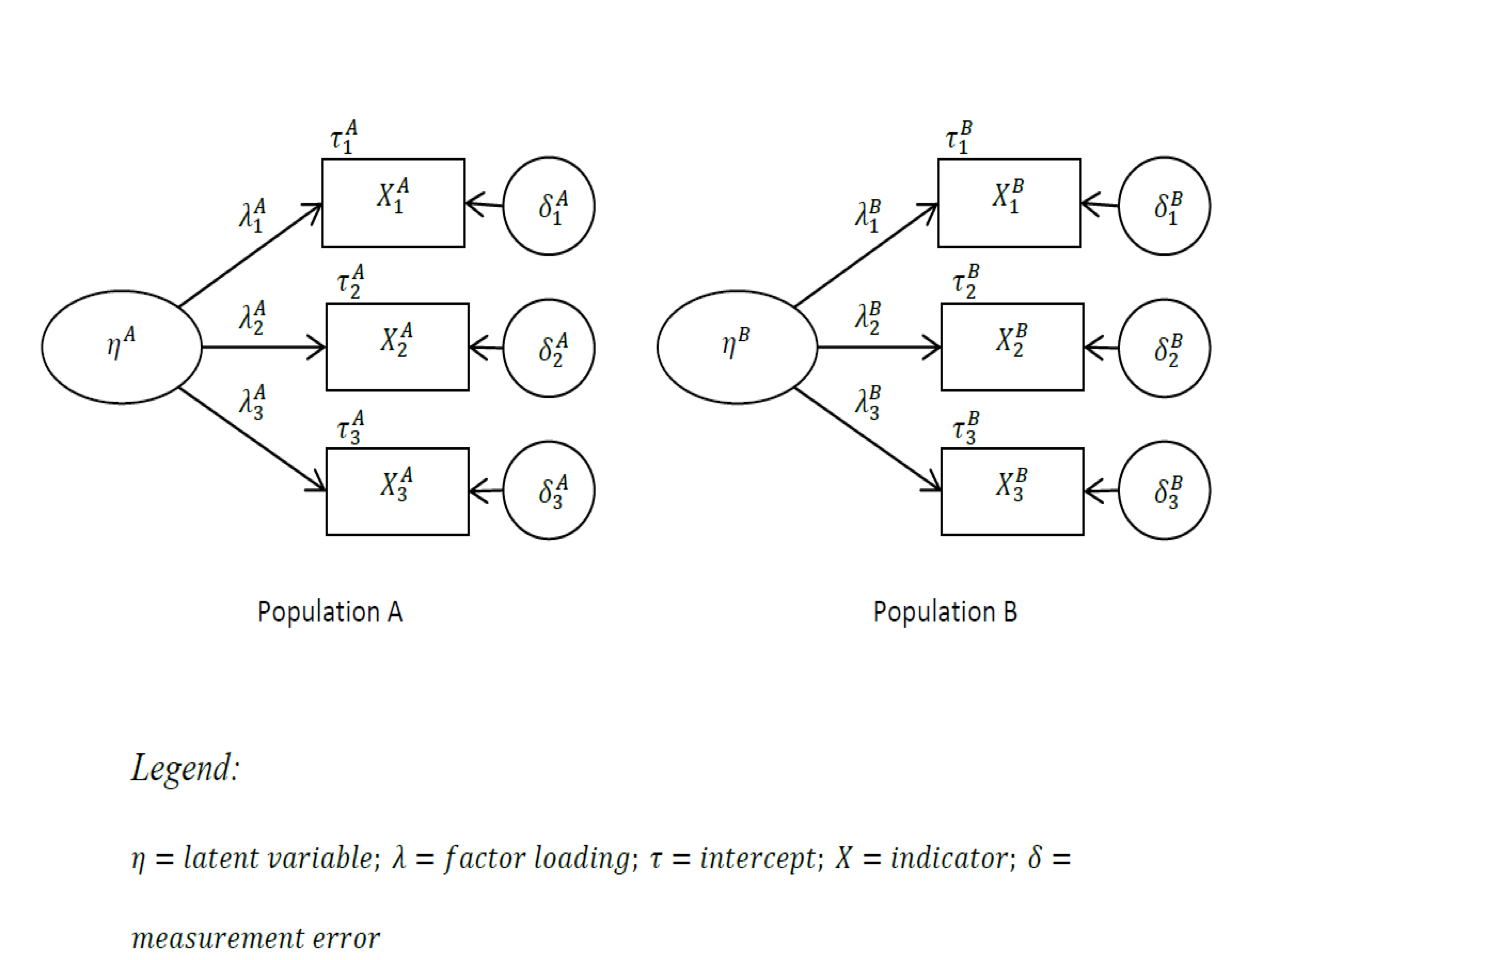 Multi-Group Confirmatory Factor Analysis Model